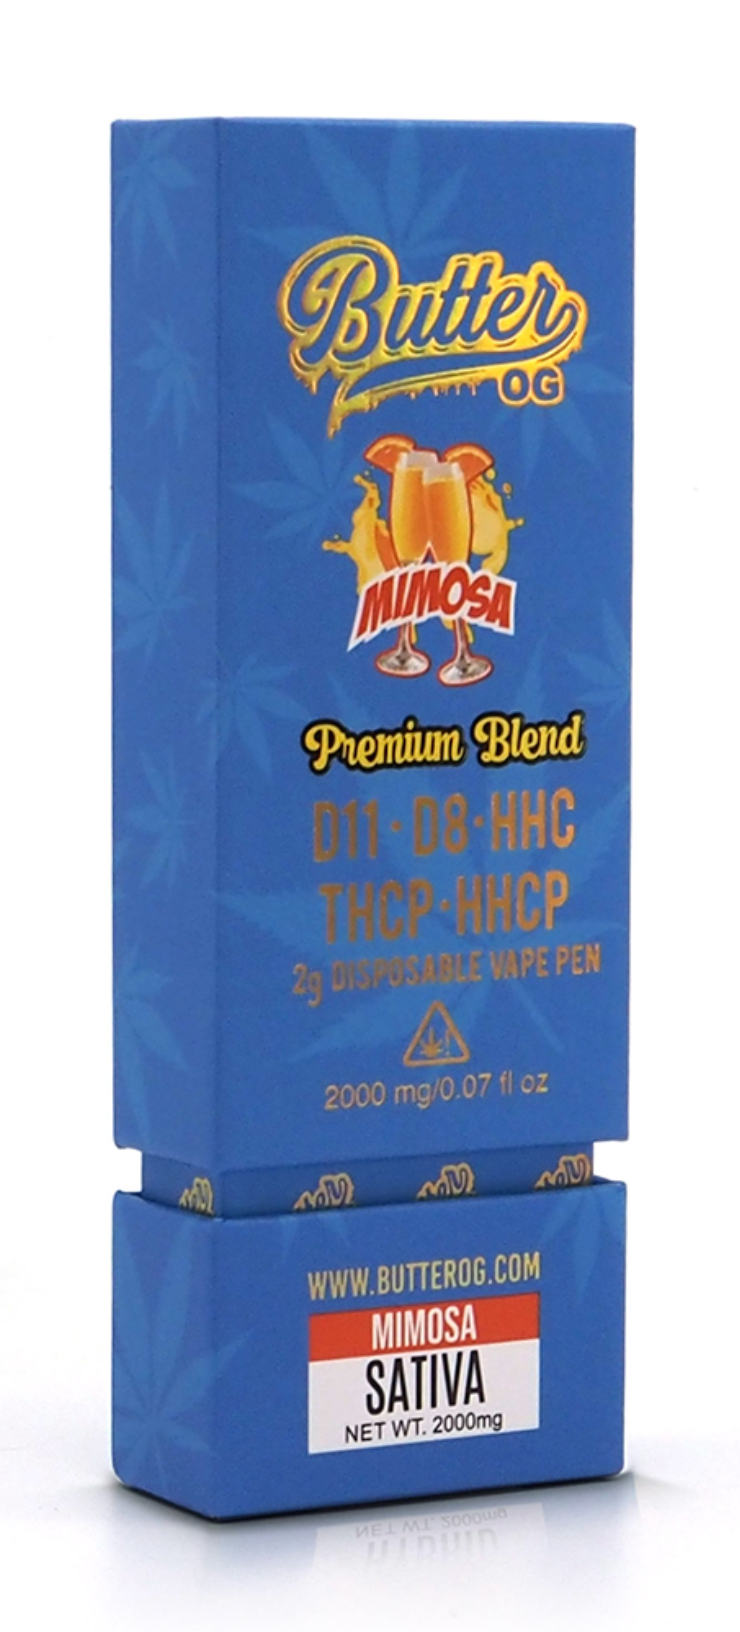 Butter OG Premium Blend D11, D8, HHC, THCP, HHCP 2g Disposable Vape - Mimosa (Sativa) - Headshop.com